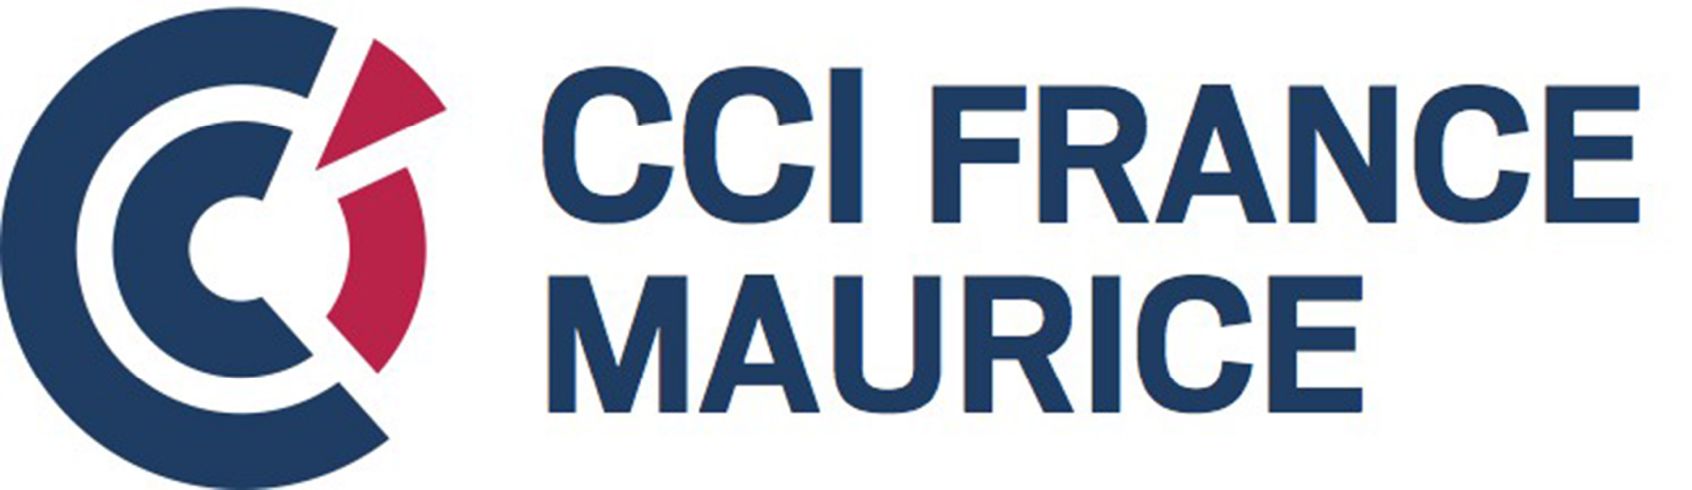 Maurice : CCI France Maurice